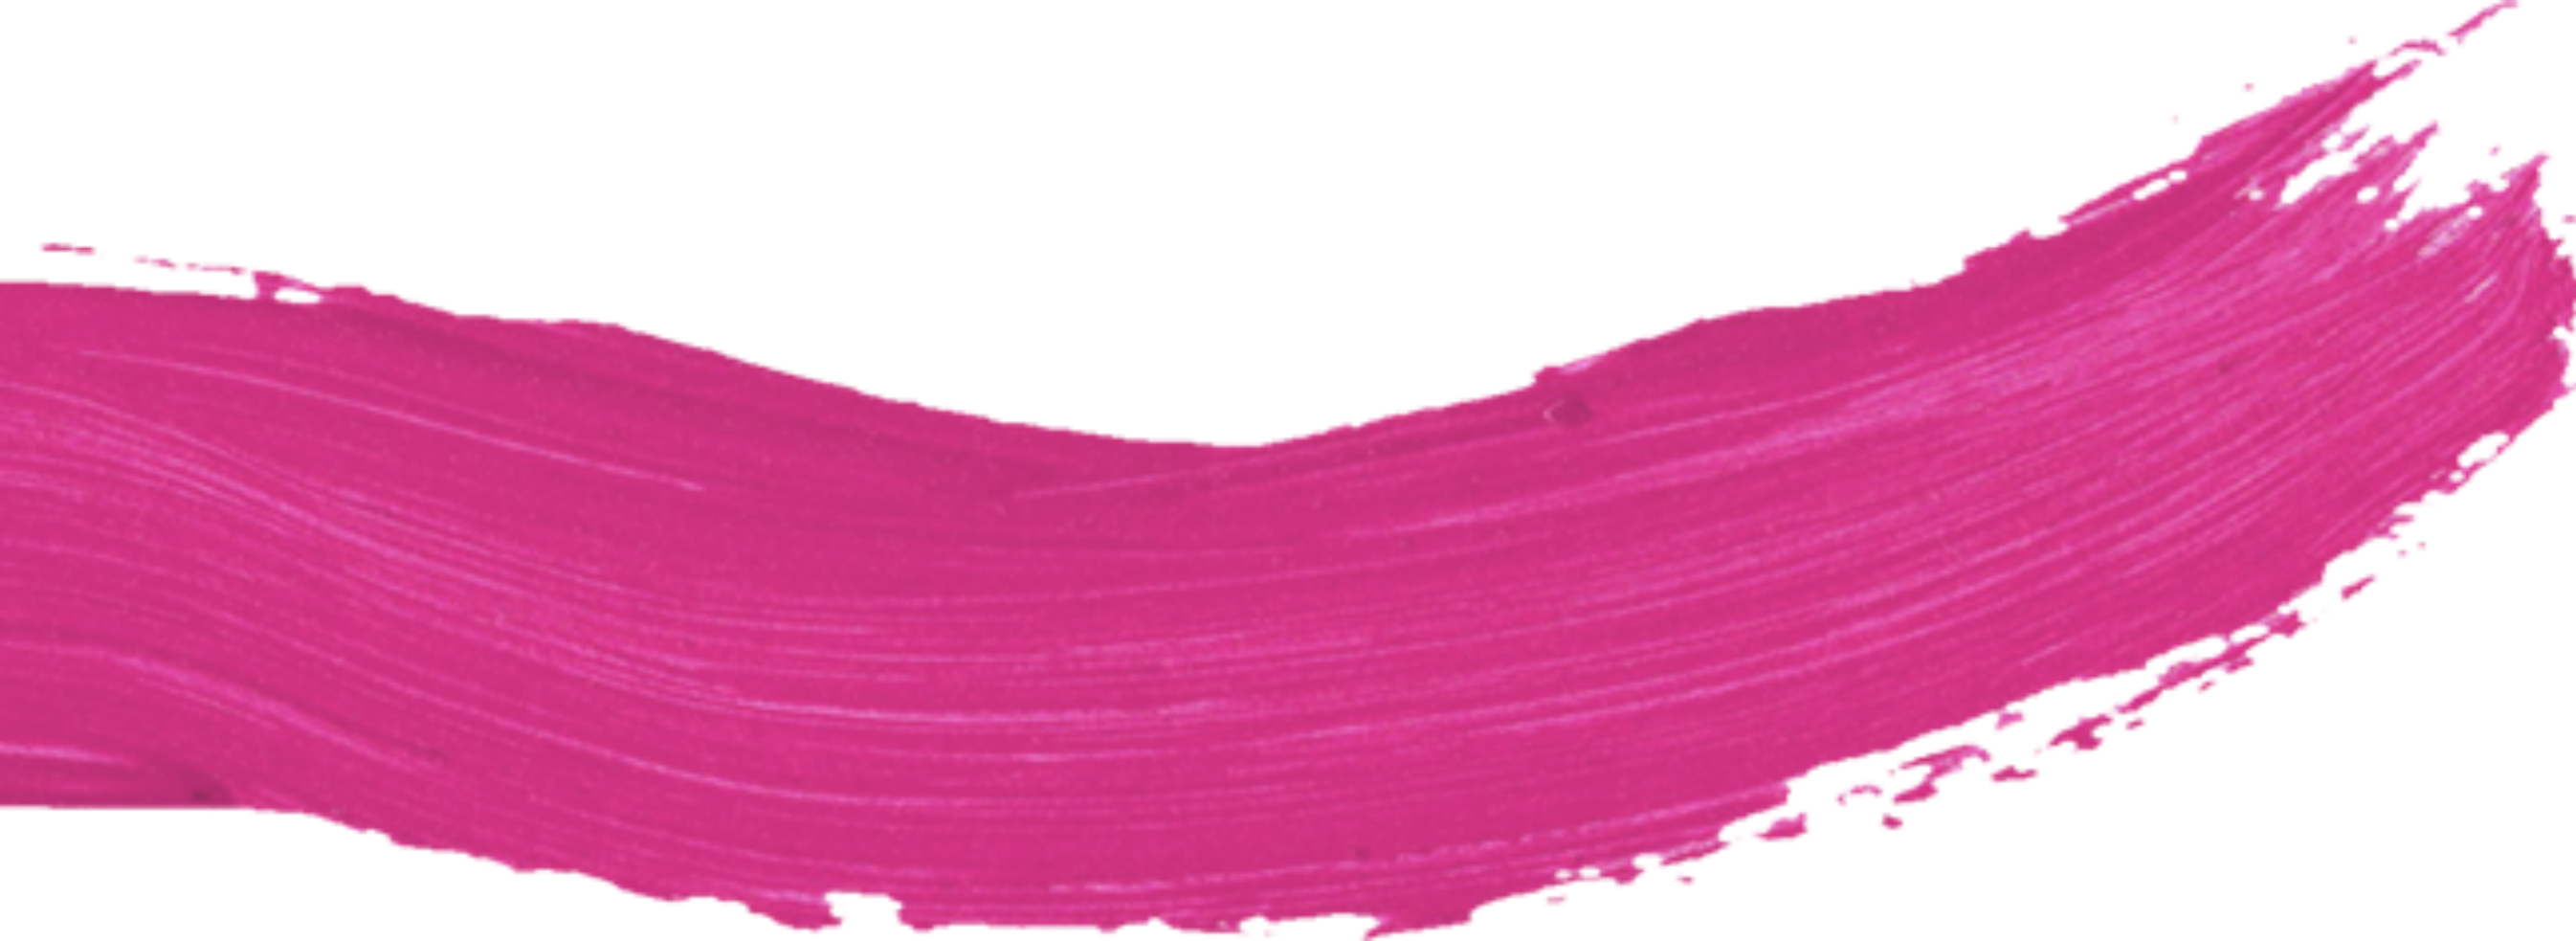 decorative image of pink paint